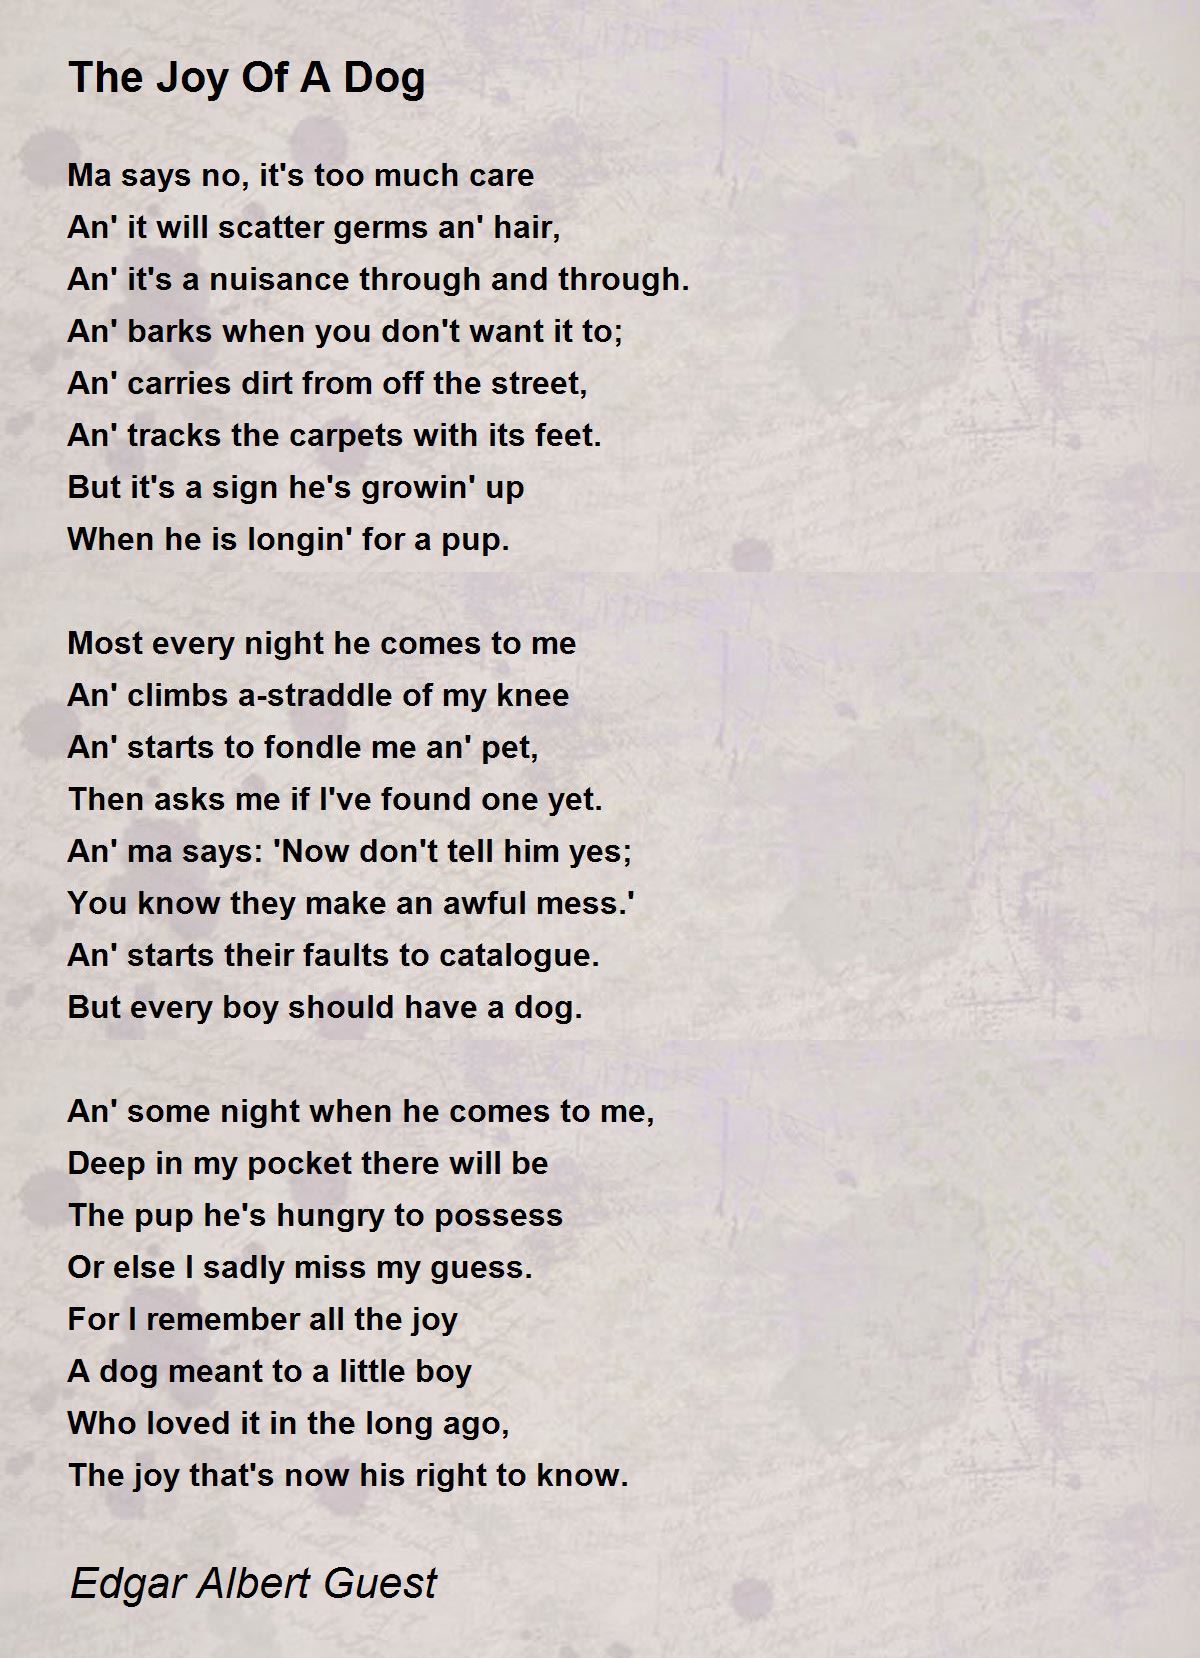 The Joy Of A Dog Poem by Edgar Albert Guest - Poem Hunter